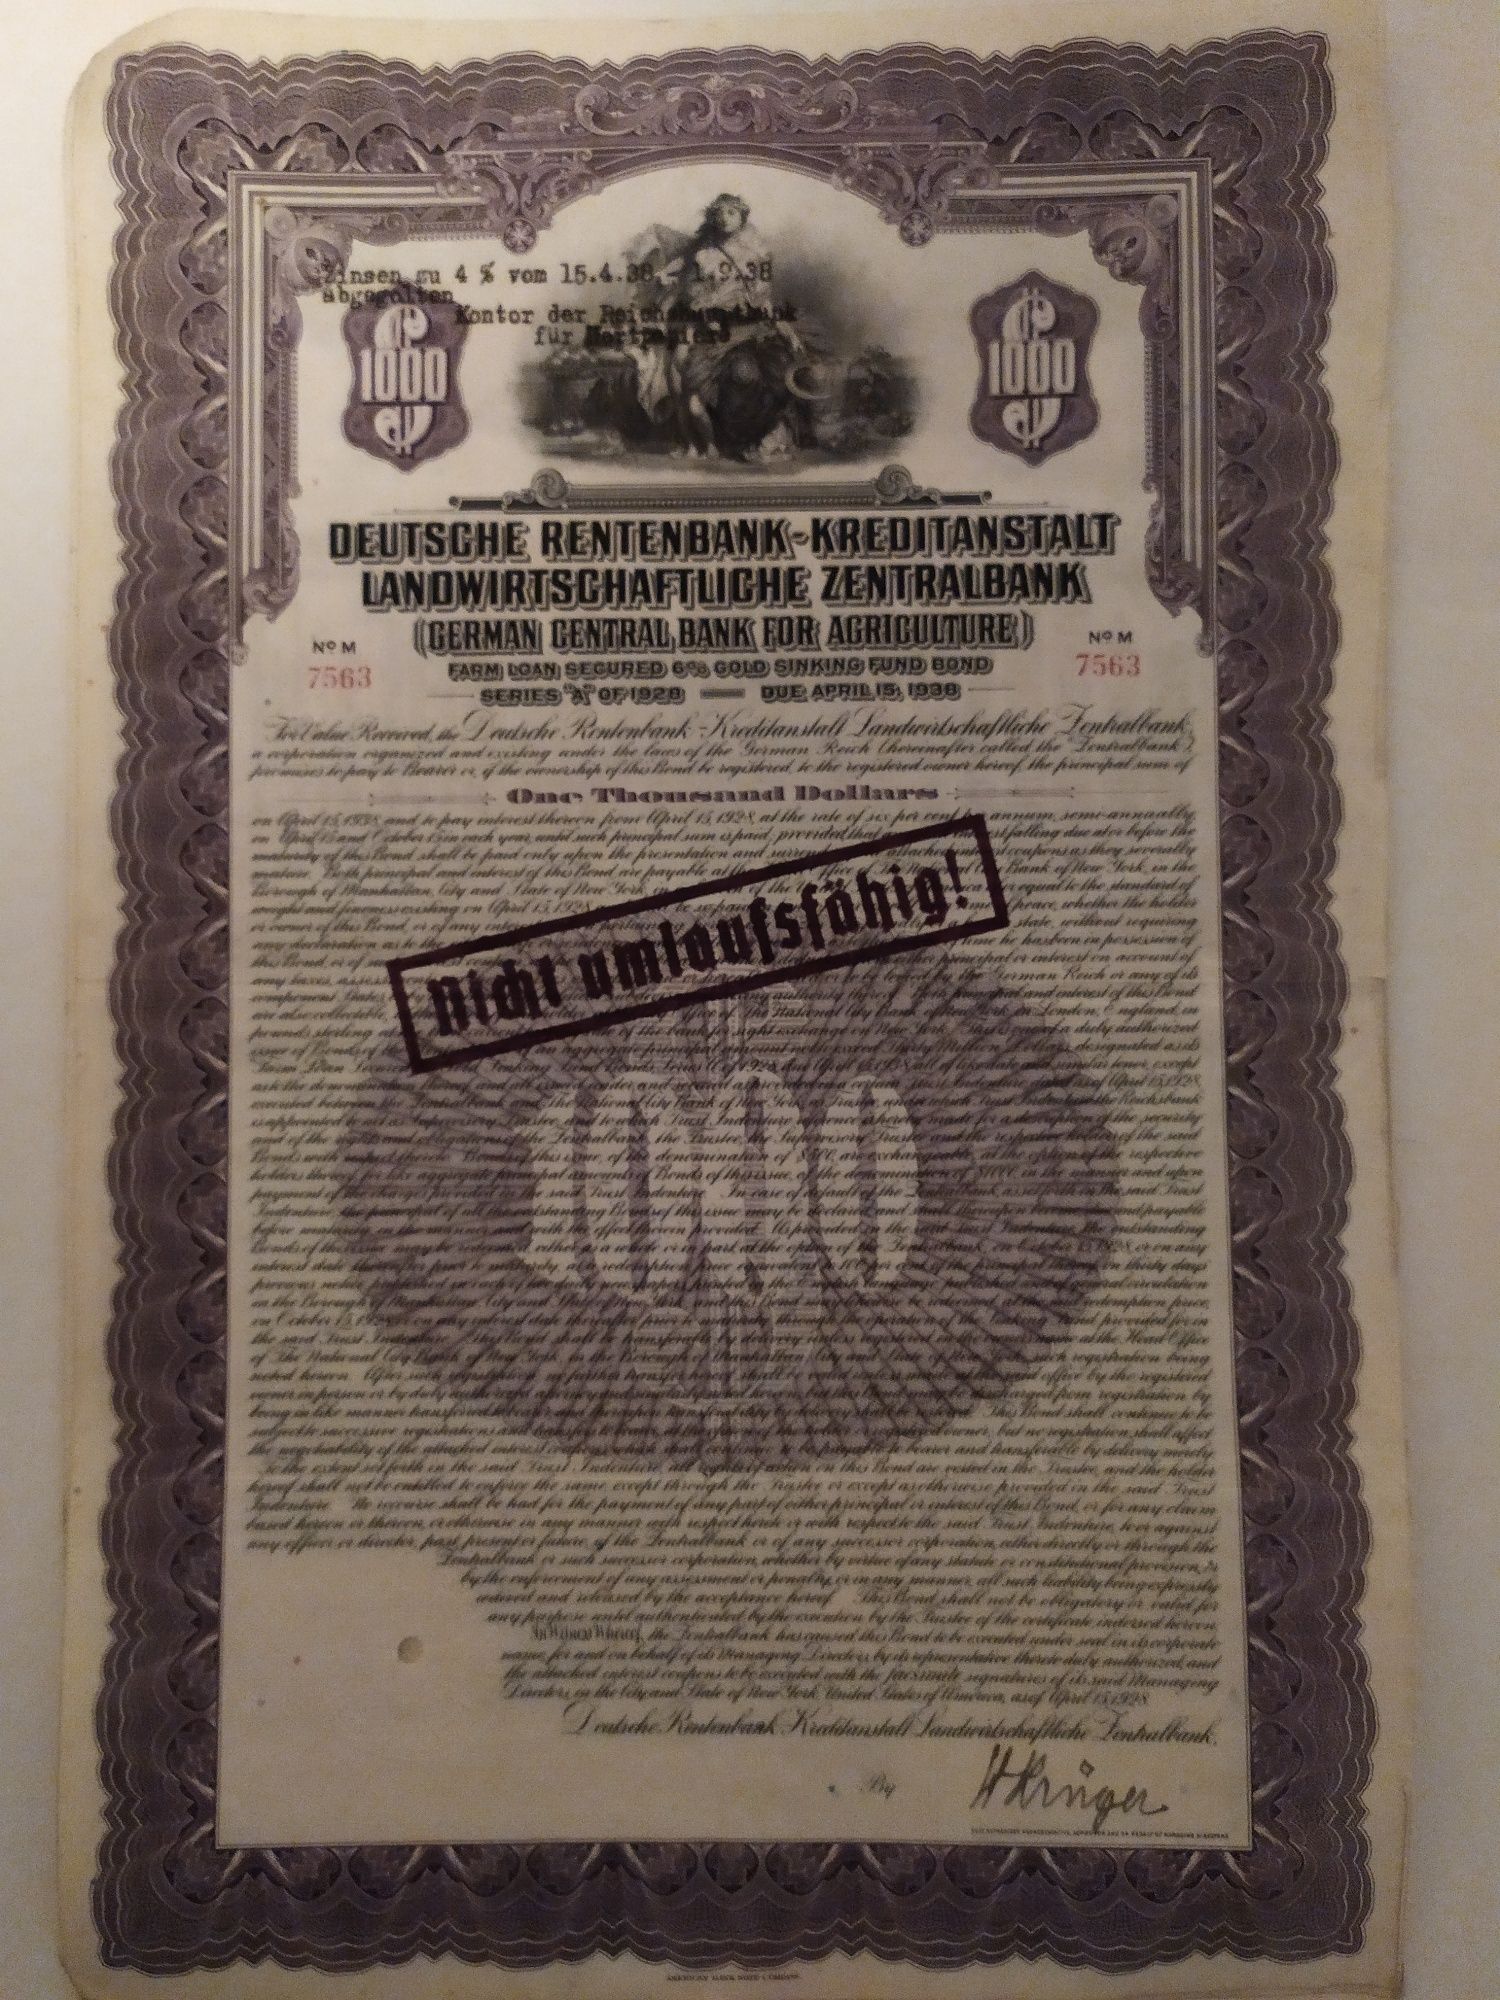 $1000 Dolari Aur Germania 1928 Obligatiune Banca Centrala bond